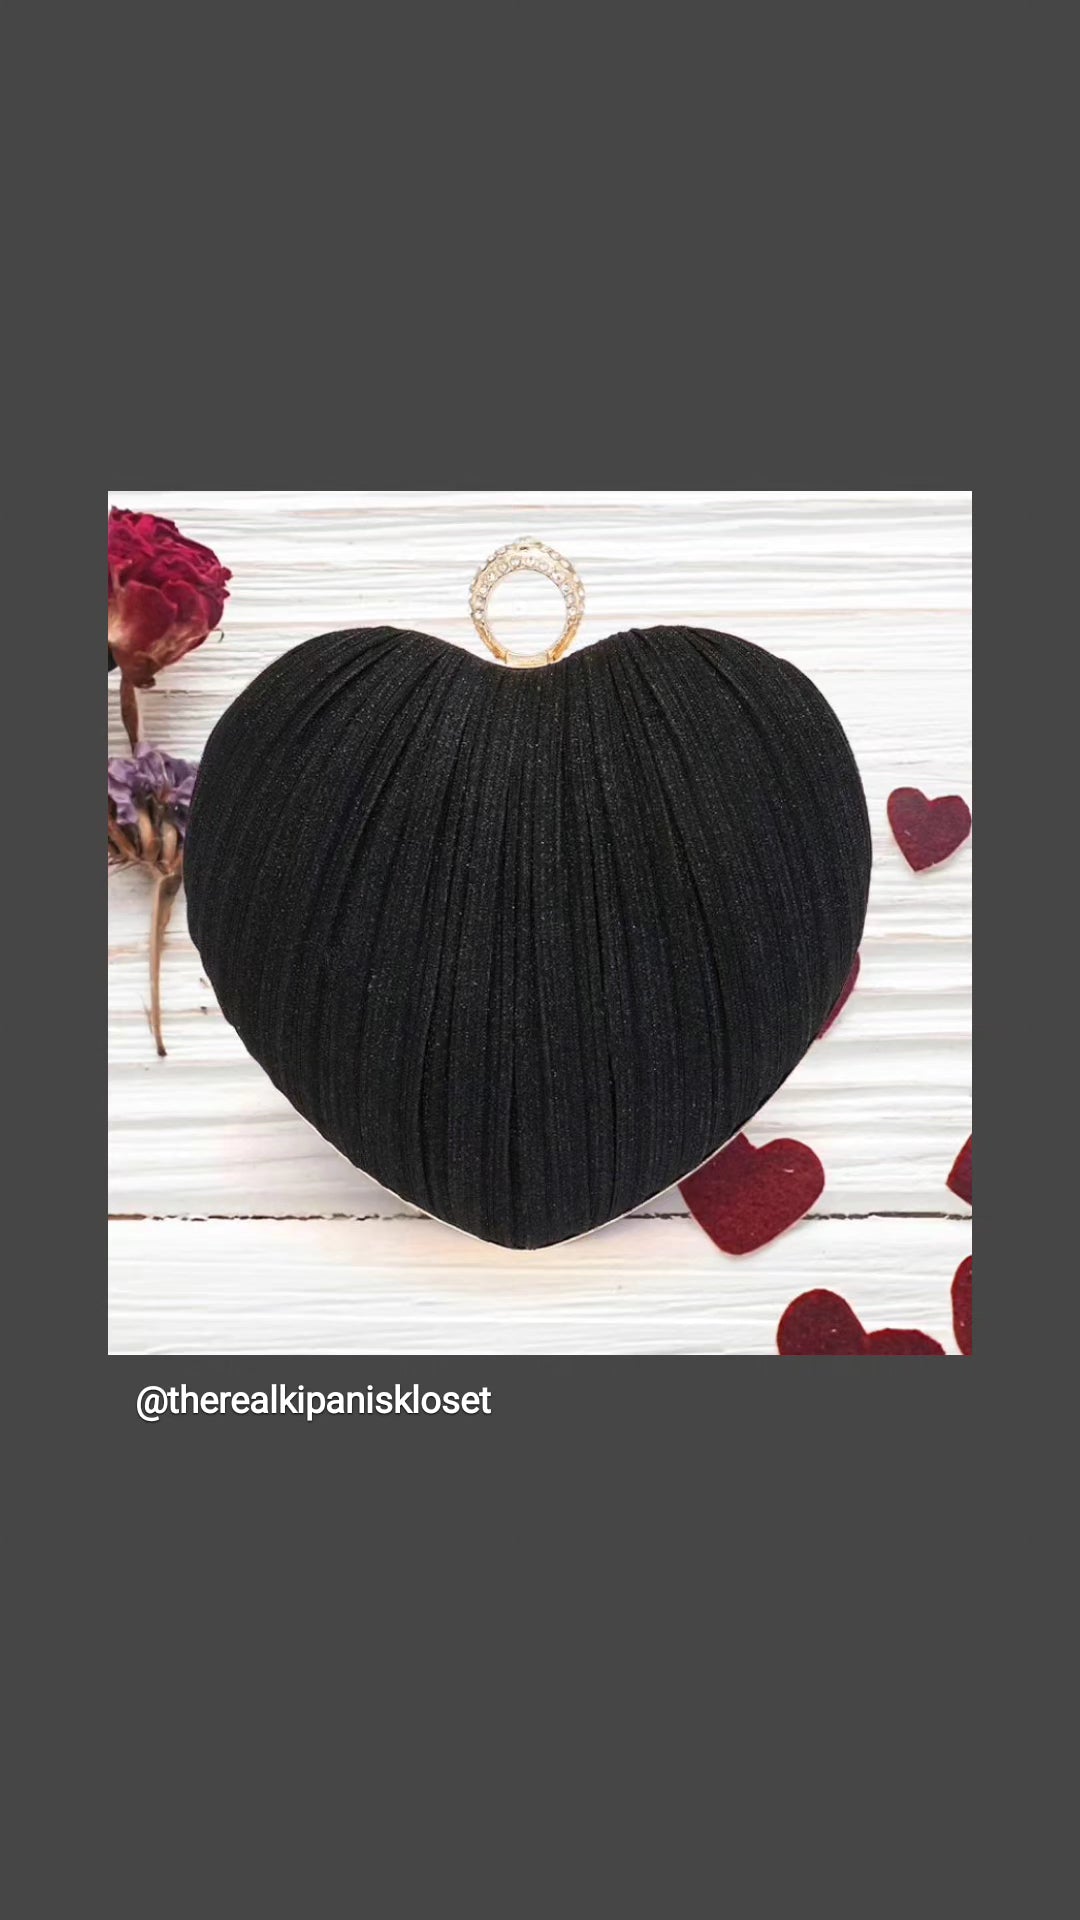 Velvet textured heart purse